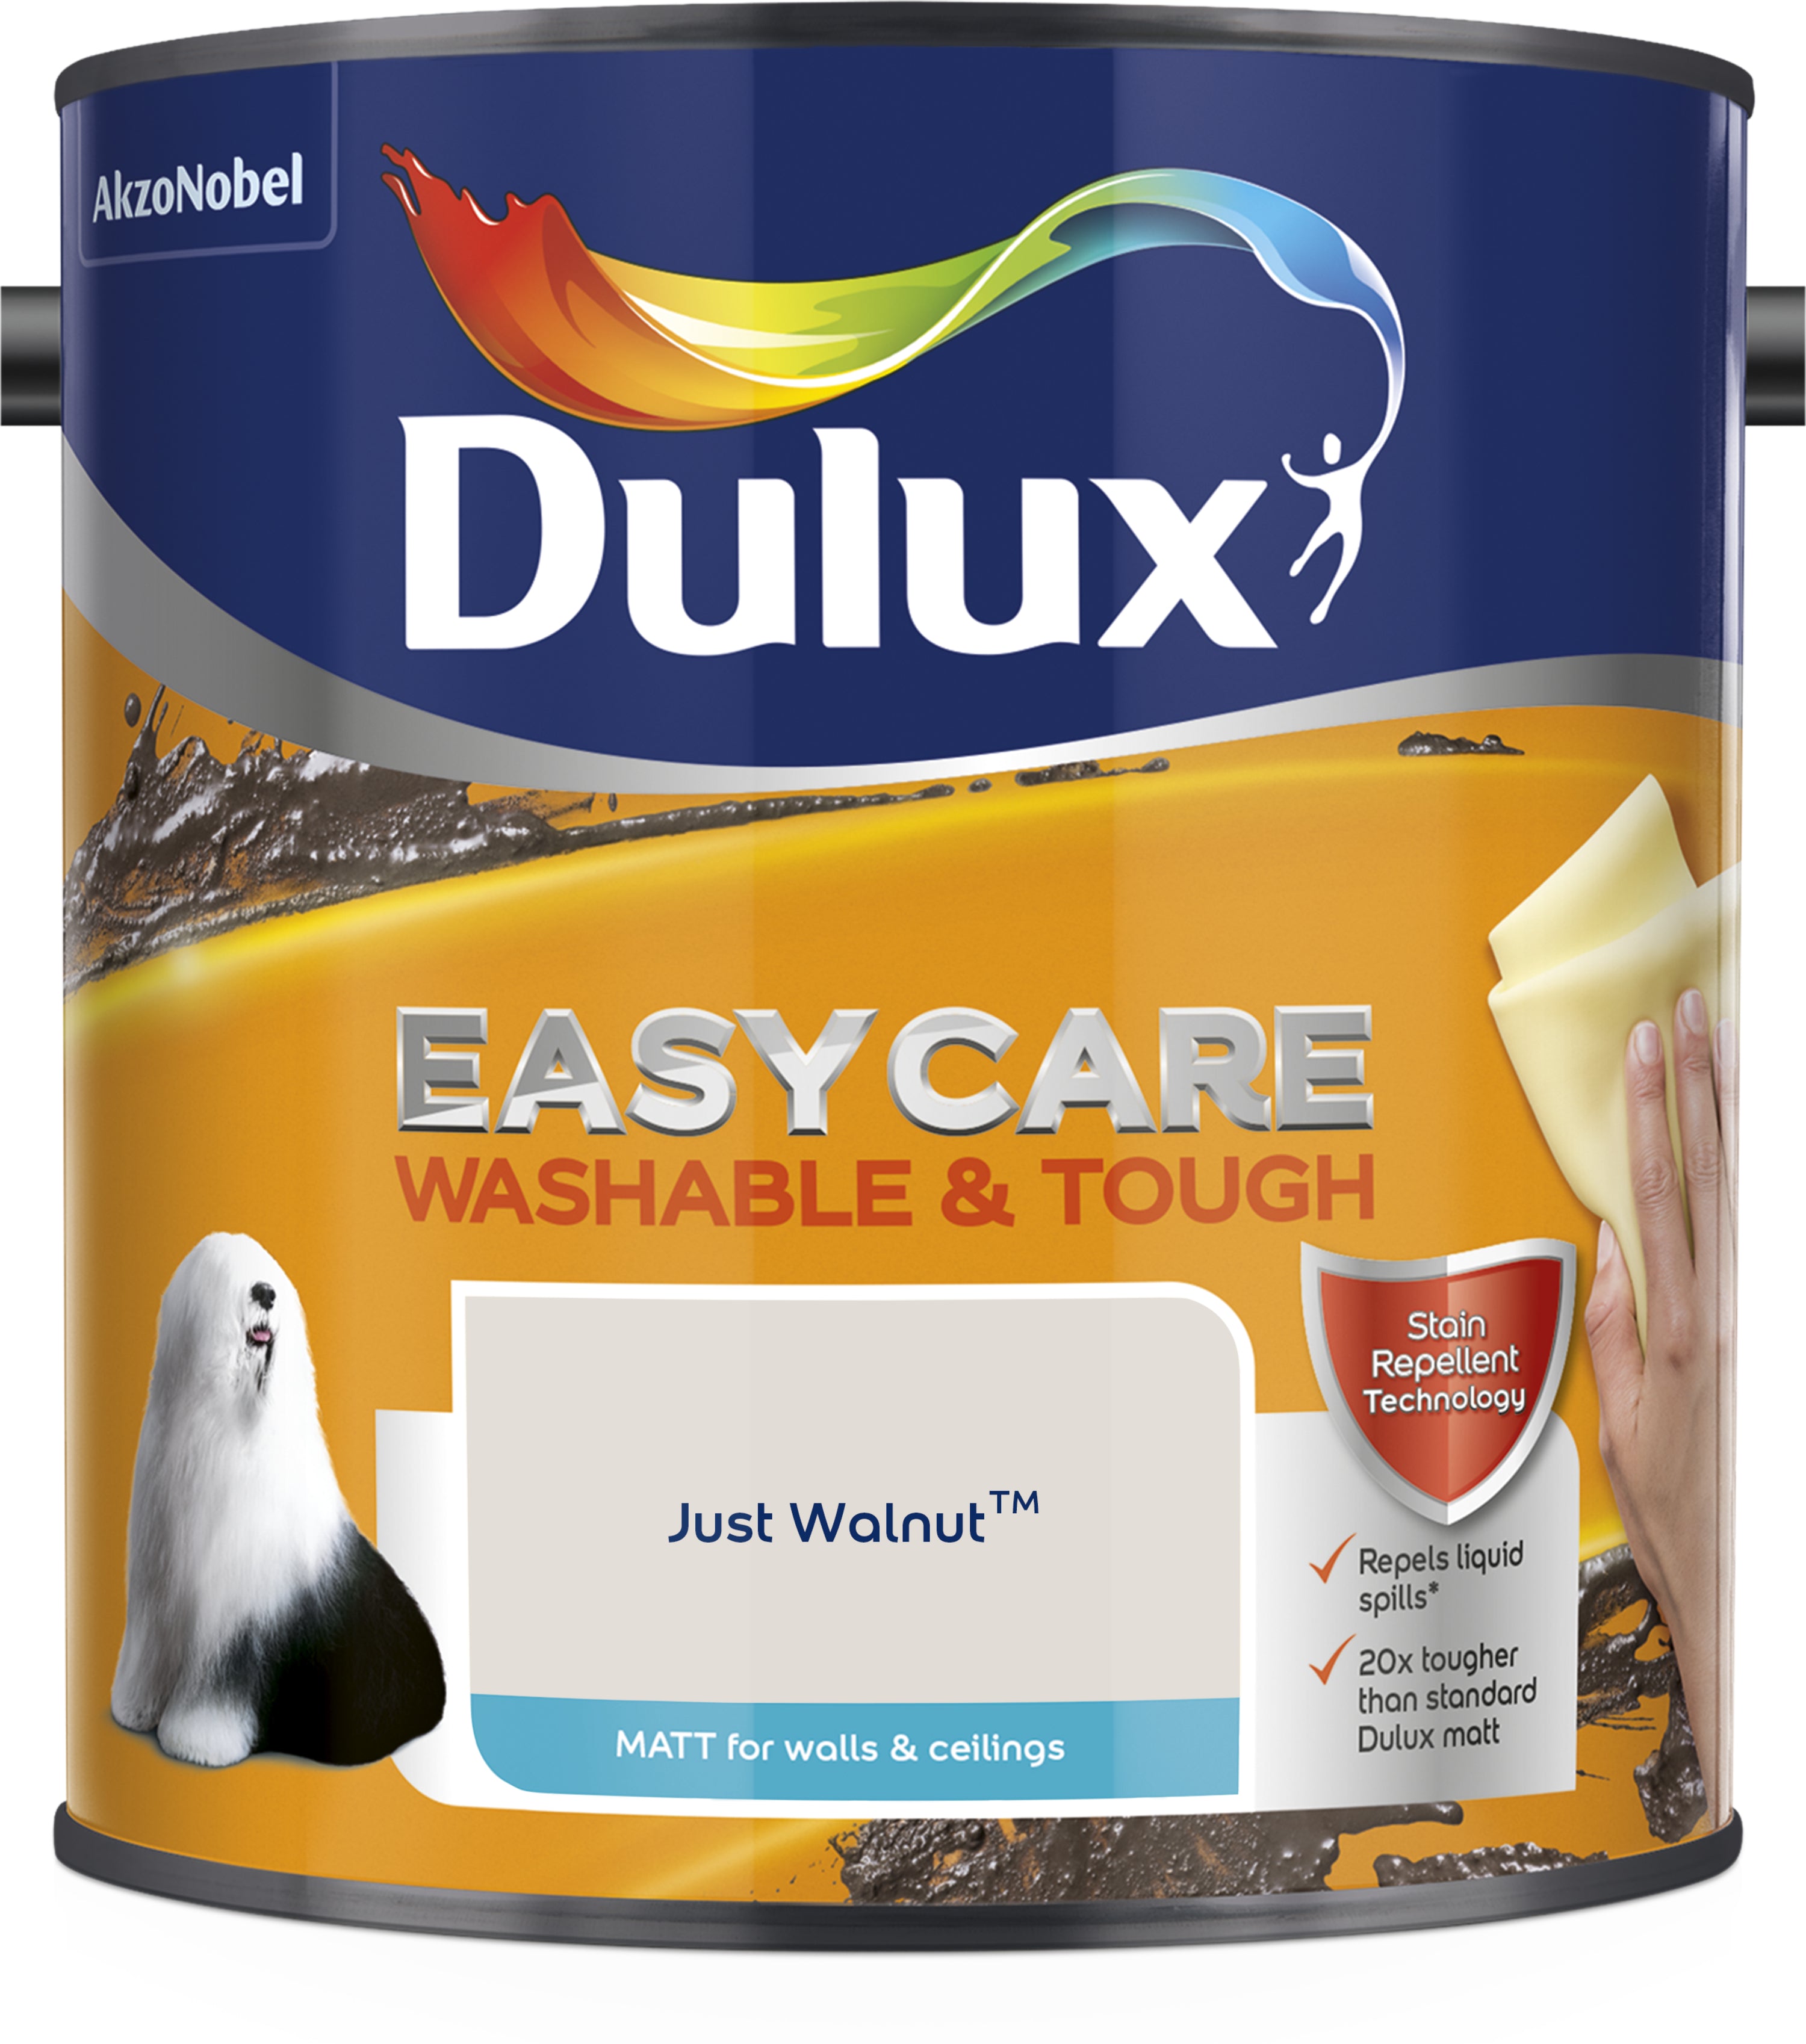 Dulux Easycare Washable & Tough Matt Just Walnut 2.5L